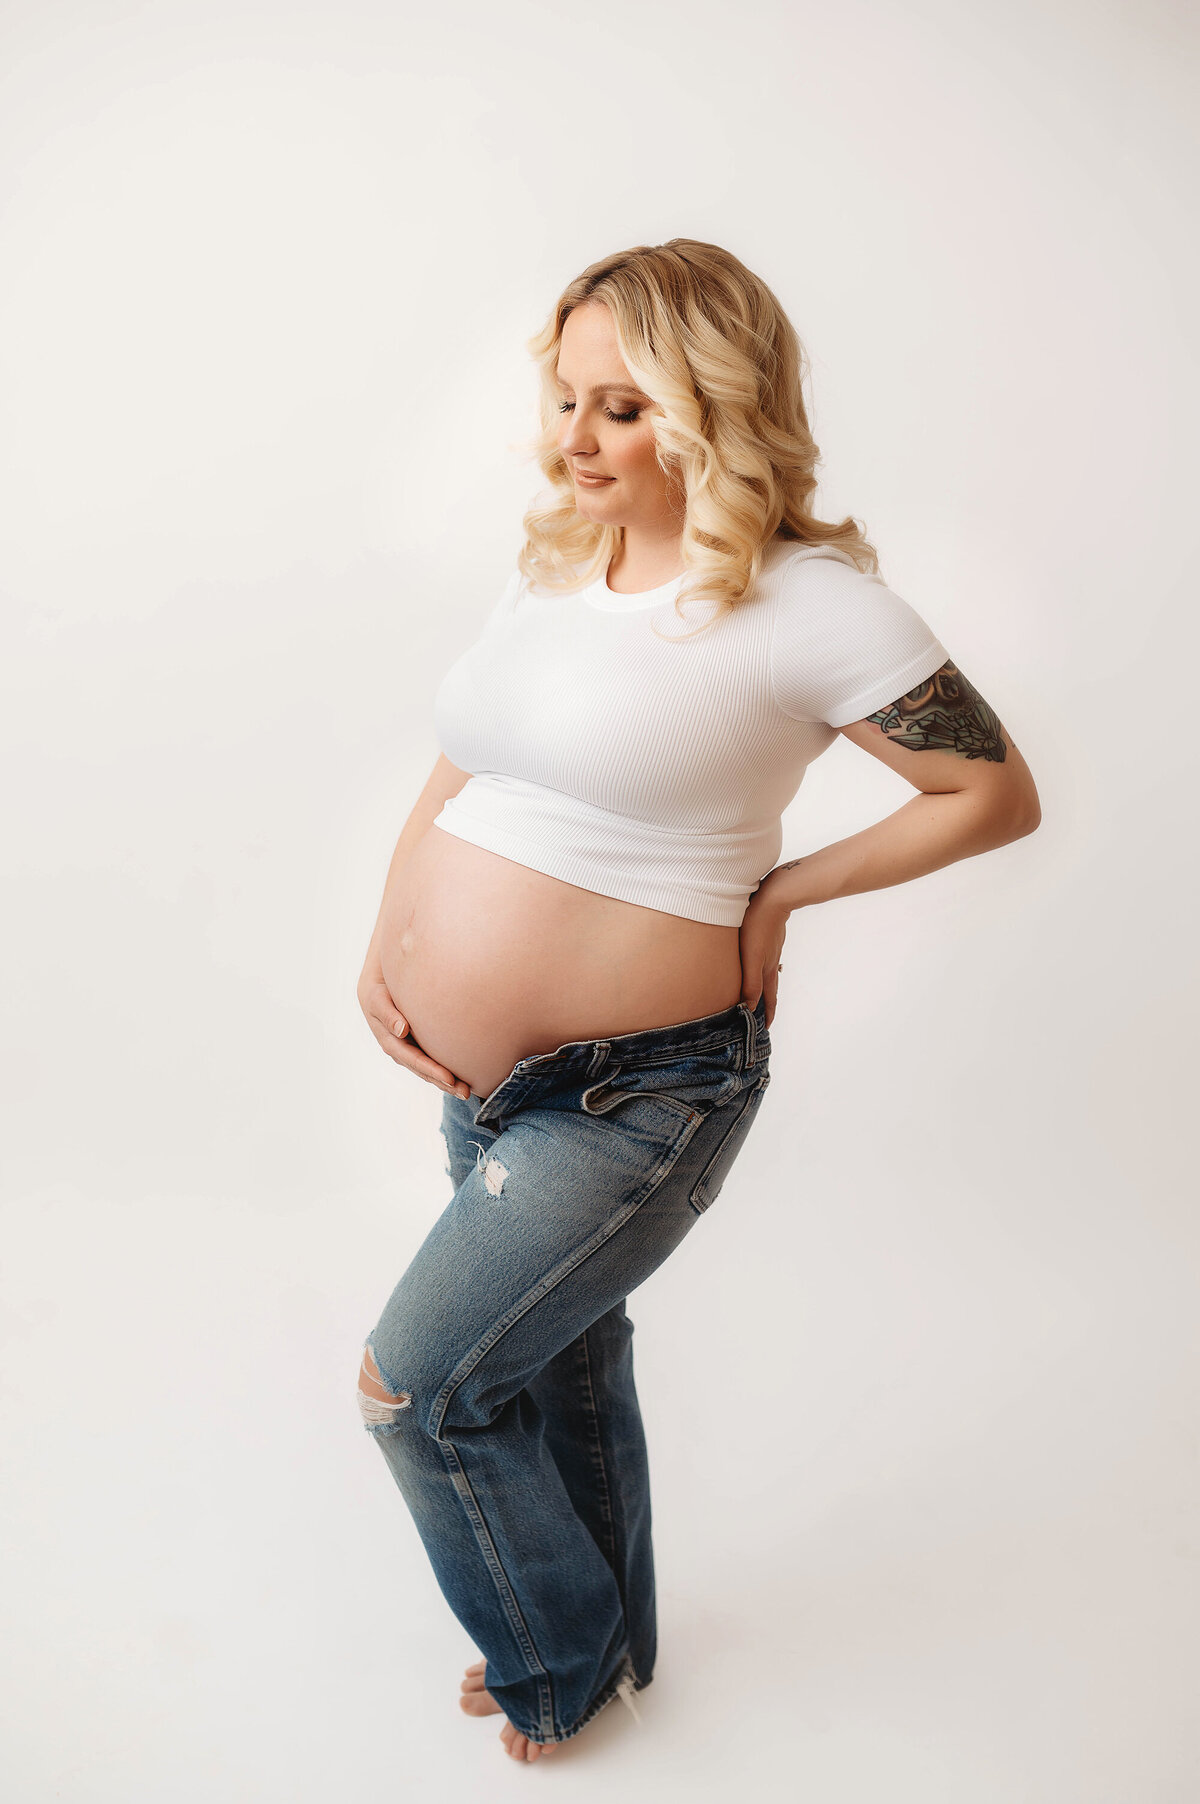 Pregnant woman poses for Studio Maternity Photos in Asheville, NC Maternity Portrait Studio.